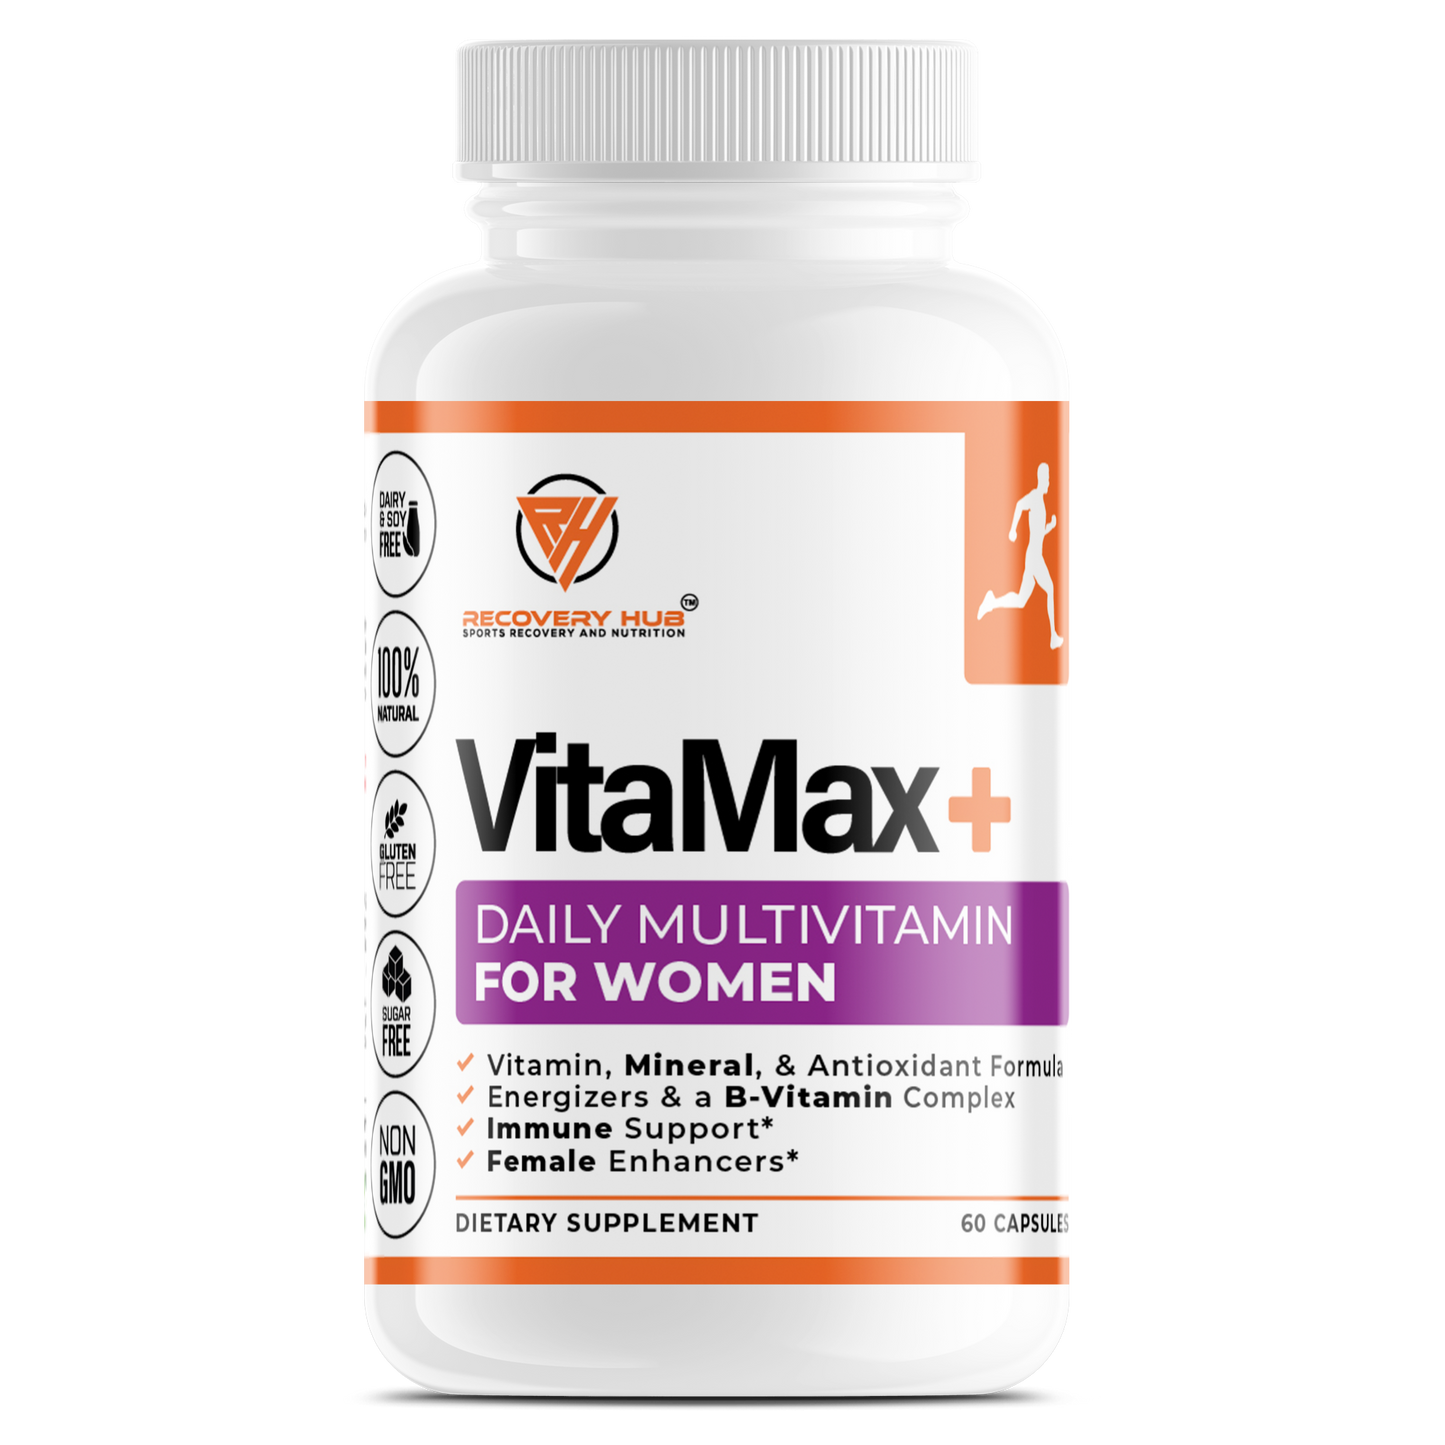 VitaMax+ (Daily Multivitamin For Women)